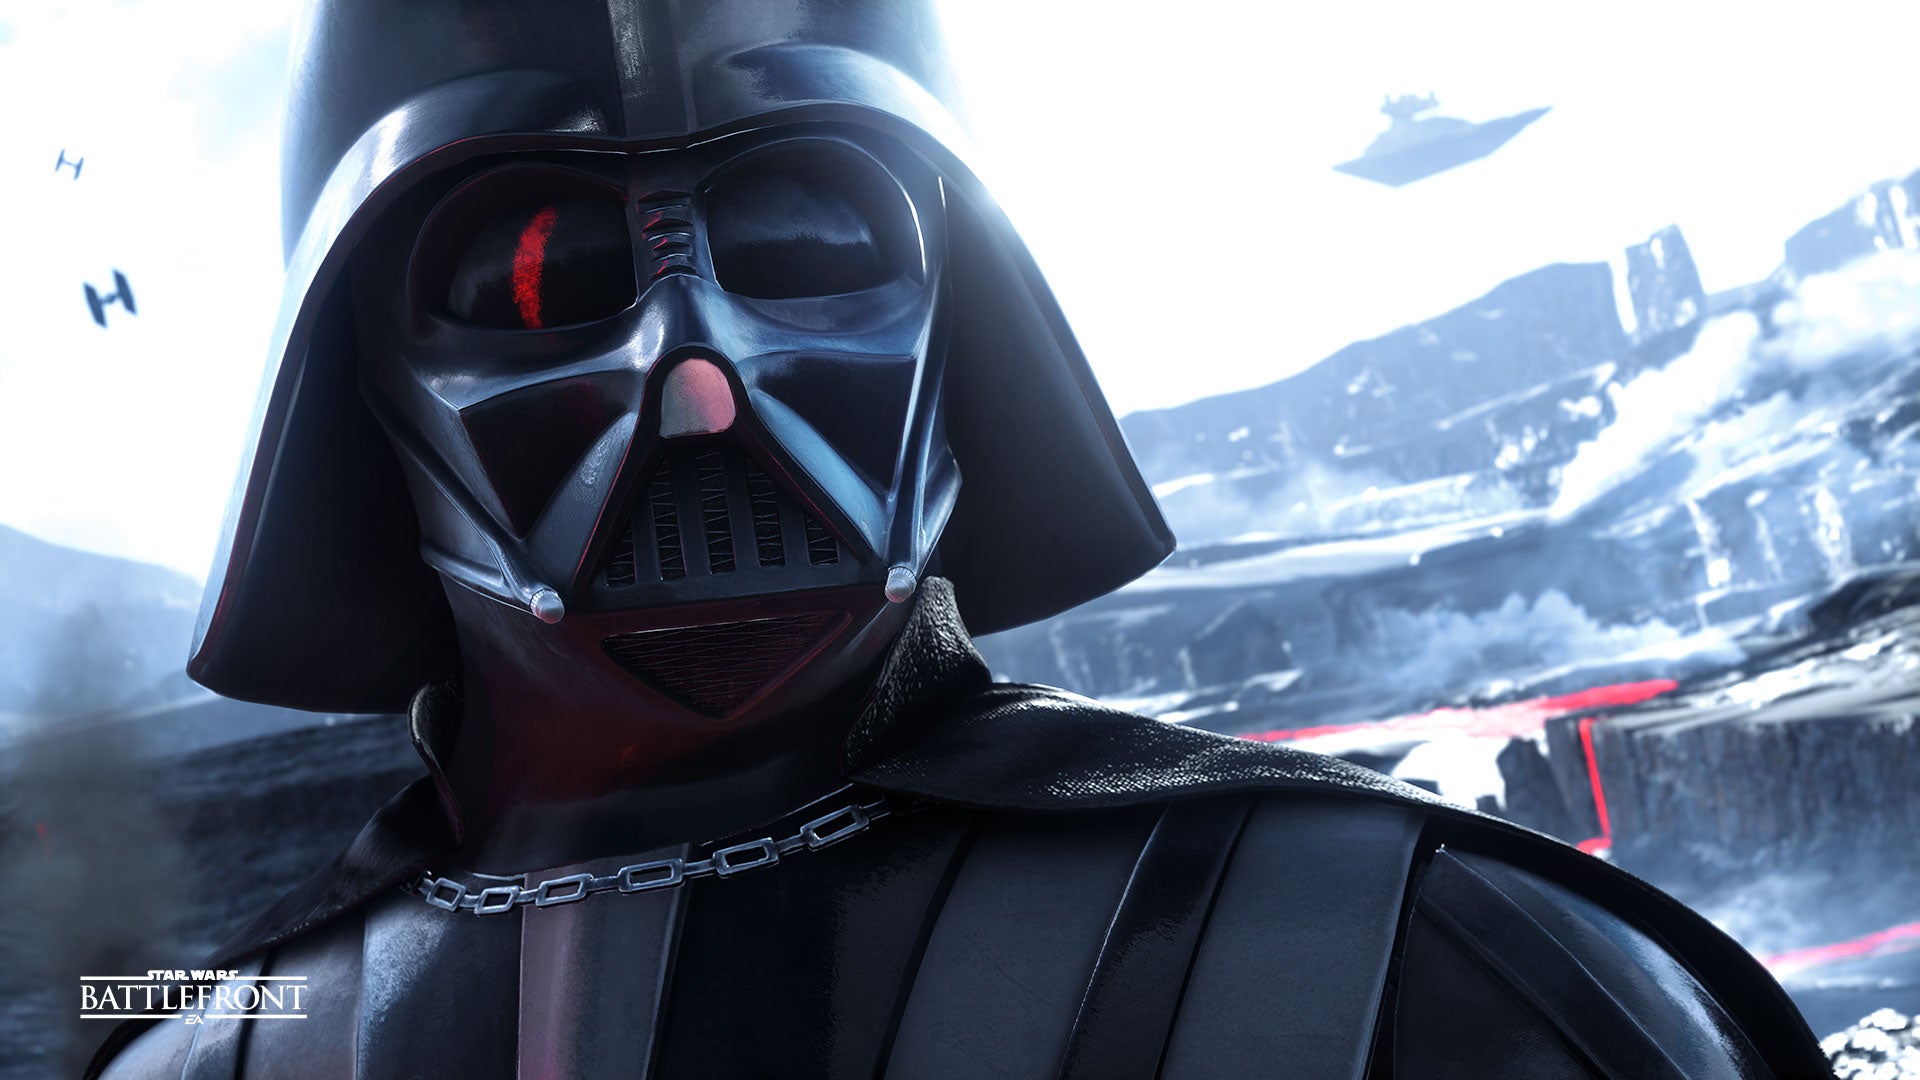 Obrazki dla Season pass do Star Wars Battlefront za darmo na PC, PS4 i Xbox One